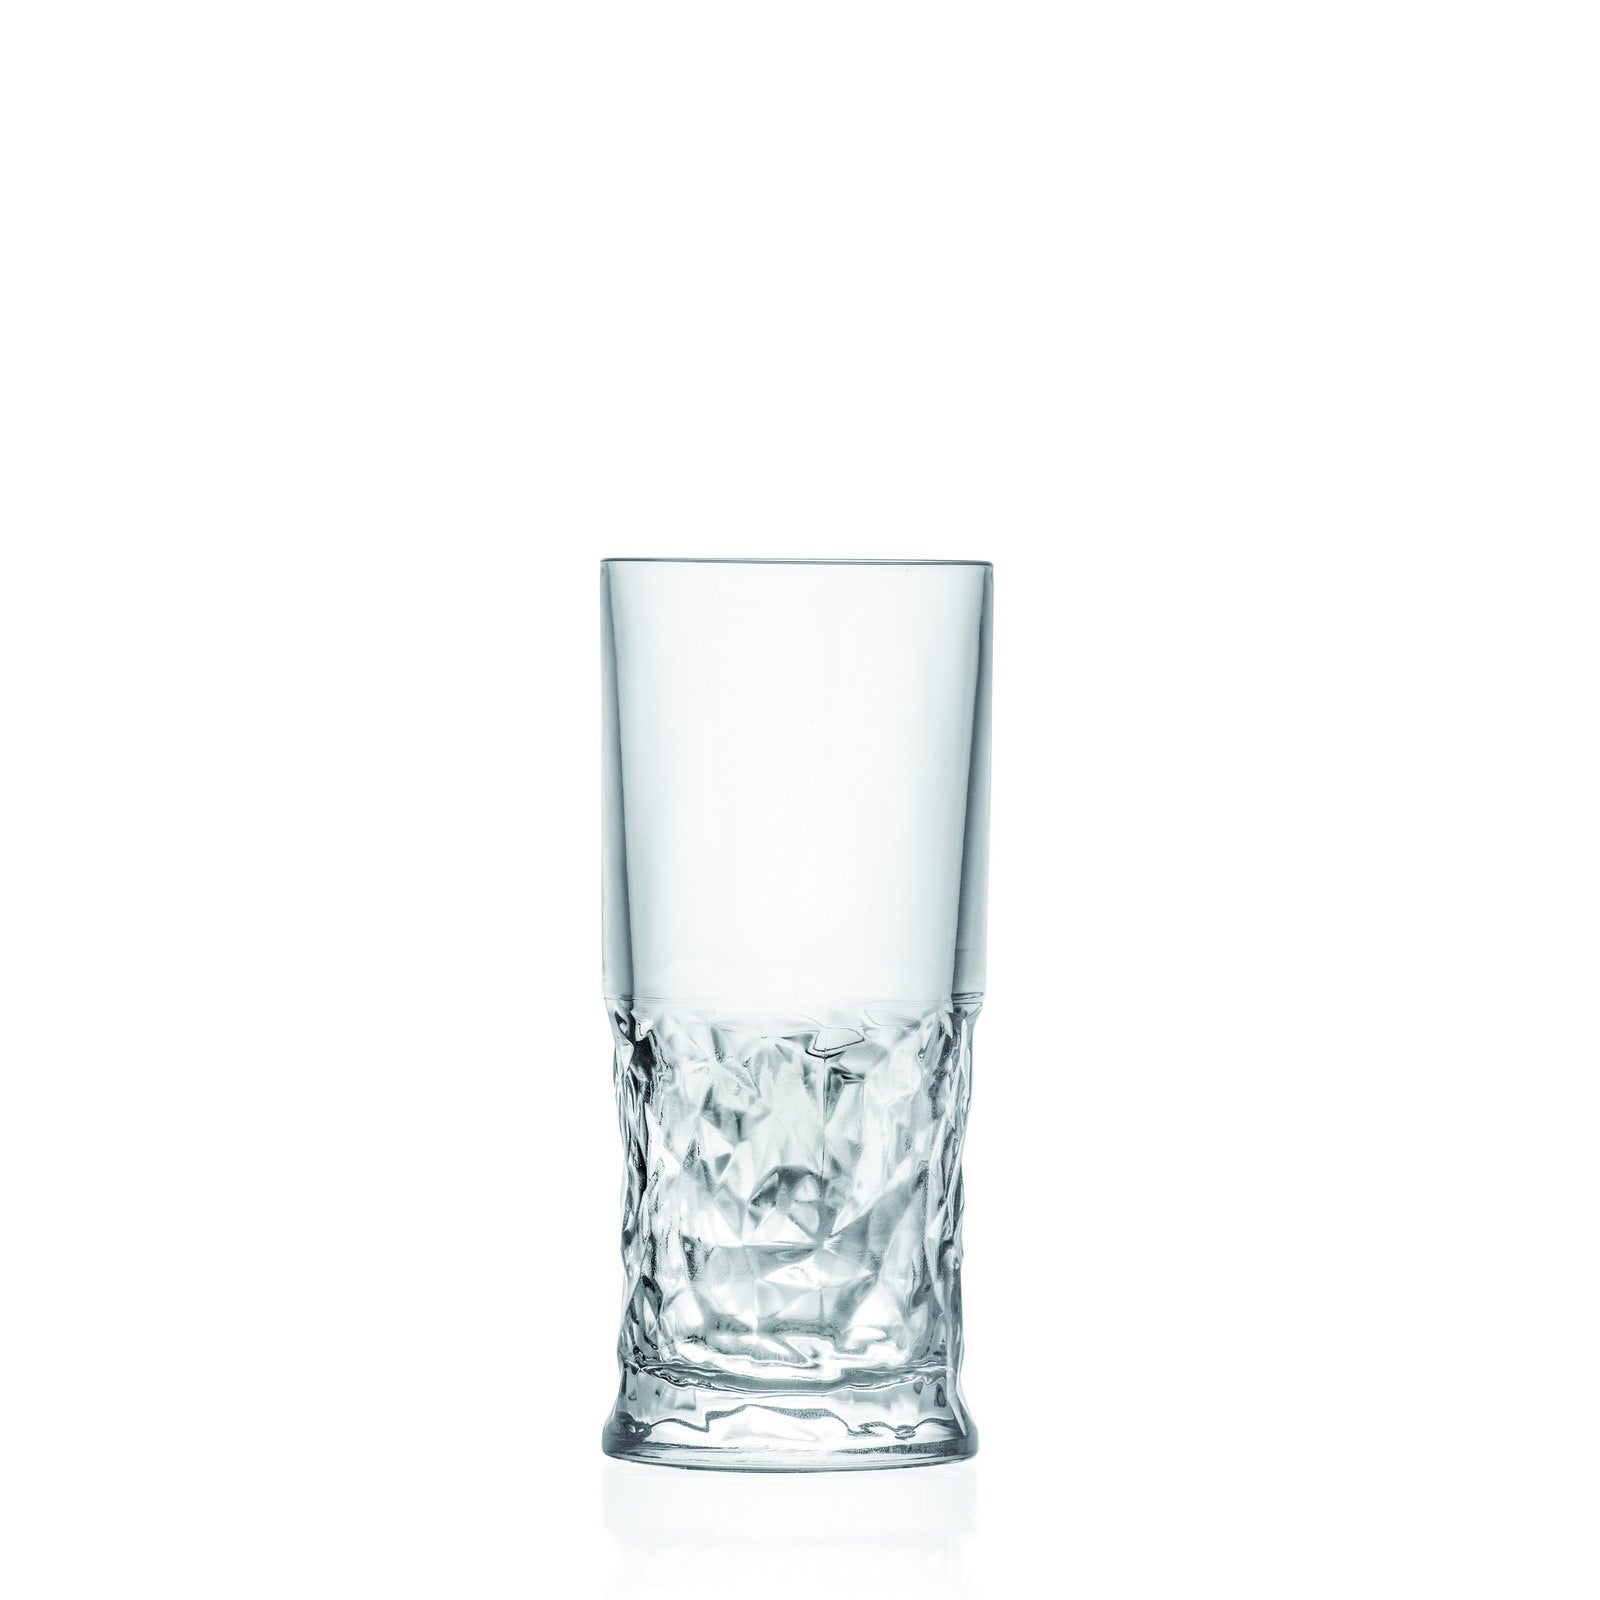 immagine-1-rcr-cristalleria-italiana-funky-hb-set-da-6-bicchieri-long-drink-in-vetro-ean-8007815269822